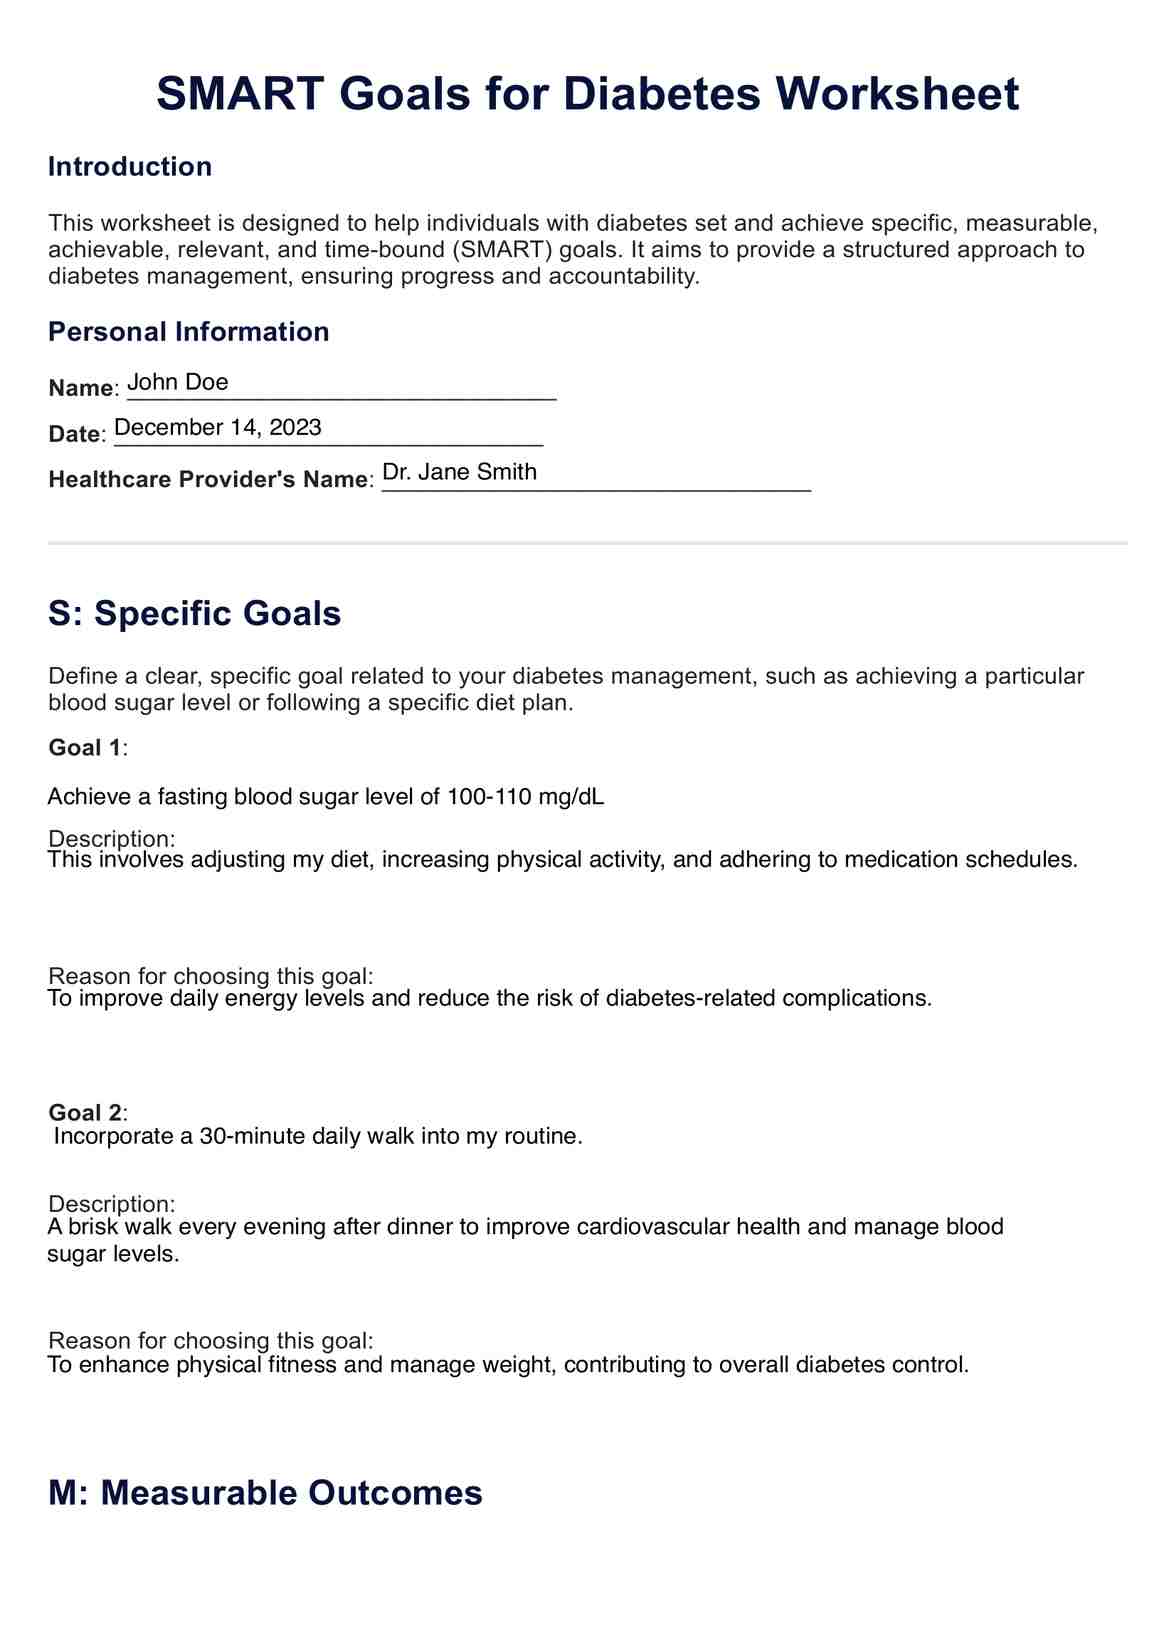 SMART Goals For Diabetes PDF Example